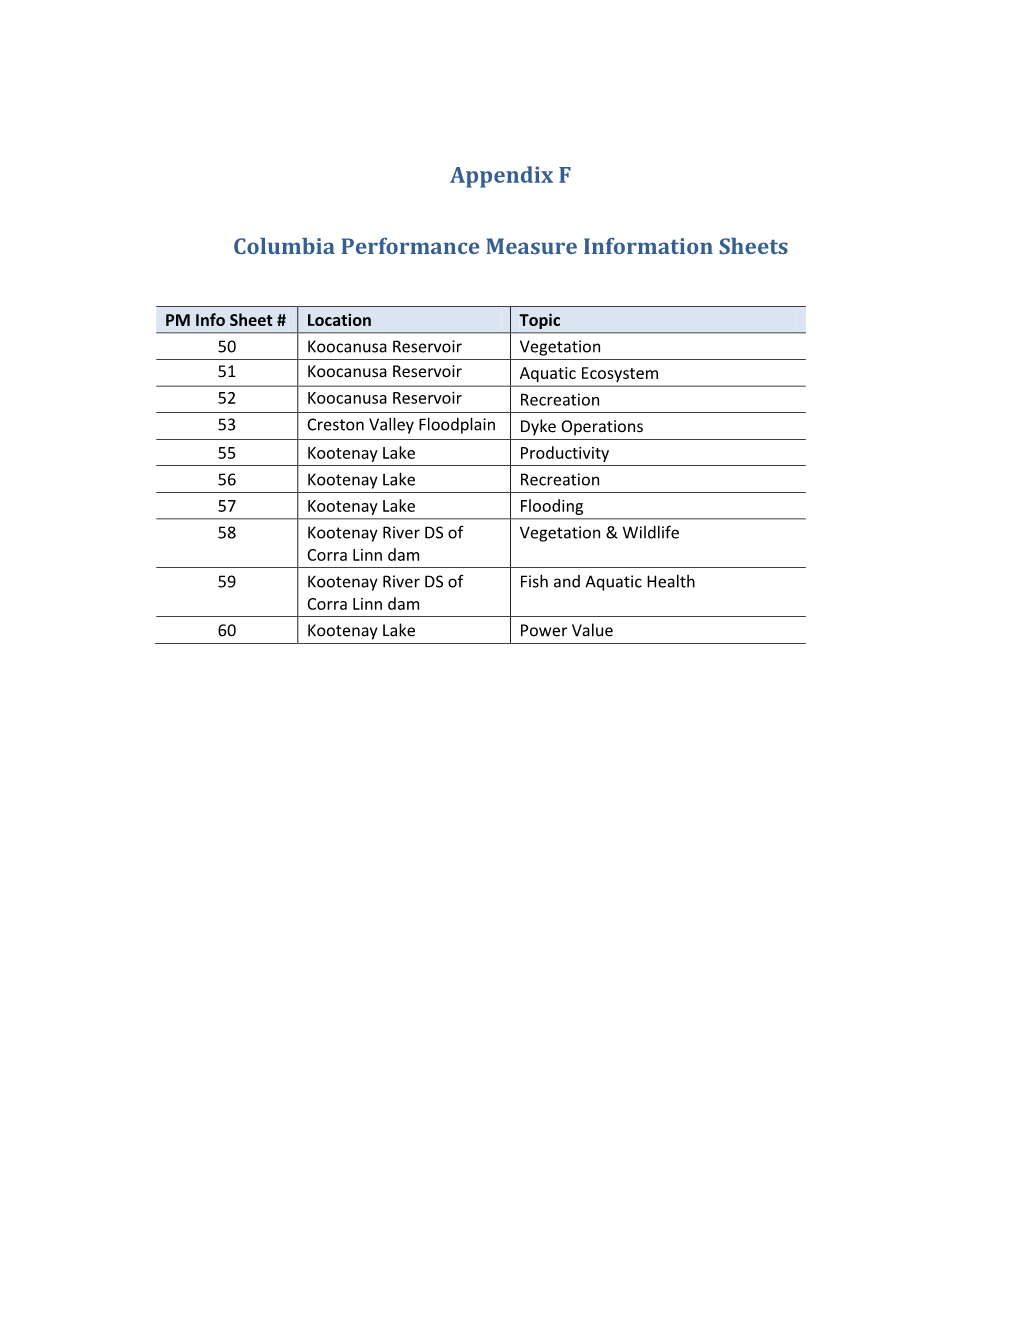 Appendix F Columbia Performance Measure Information Sheets